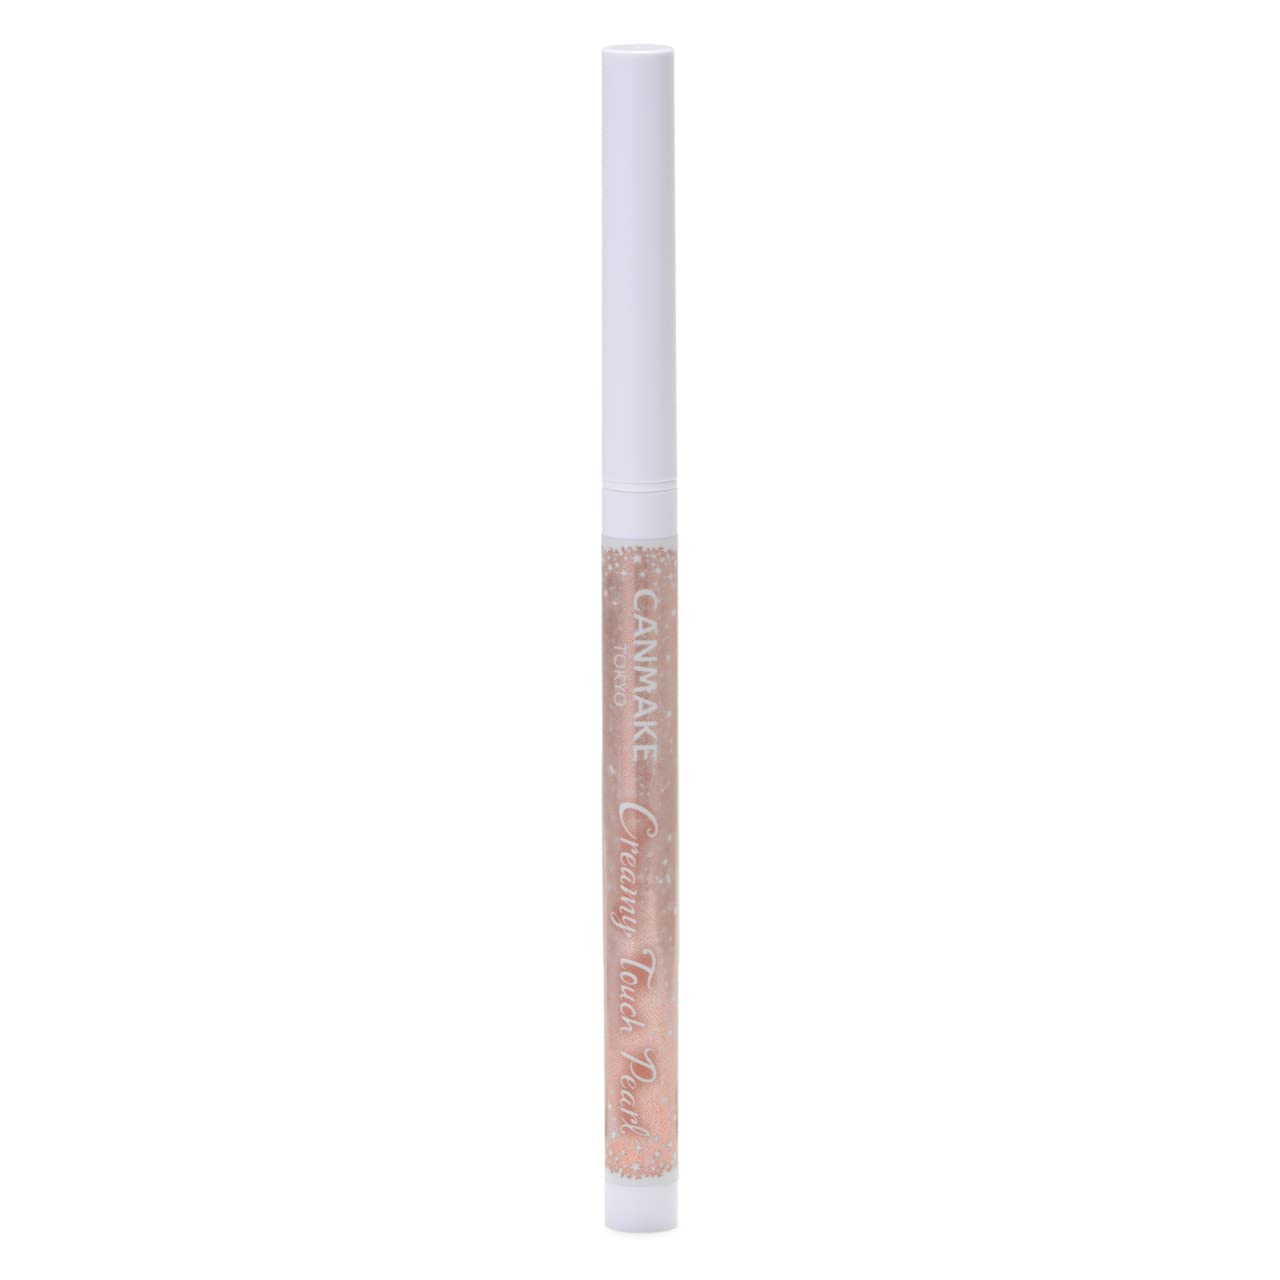 RMK Skin Tint 01 SPF20 Liquid Foundation - Light Beige Moisturizing with Pore Cover